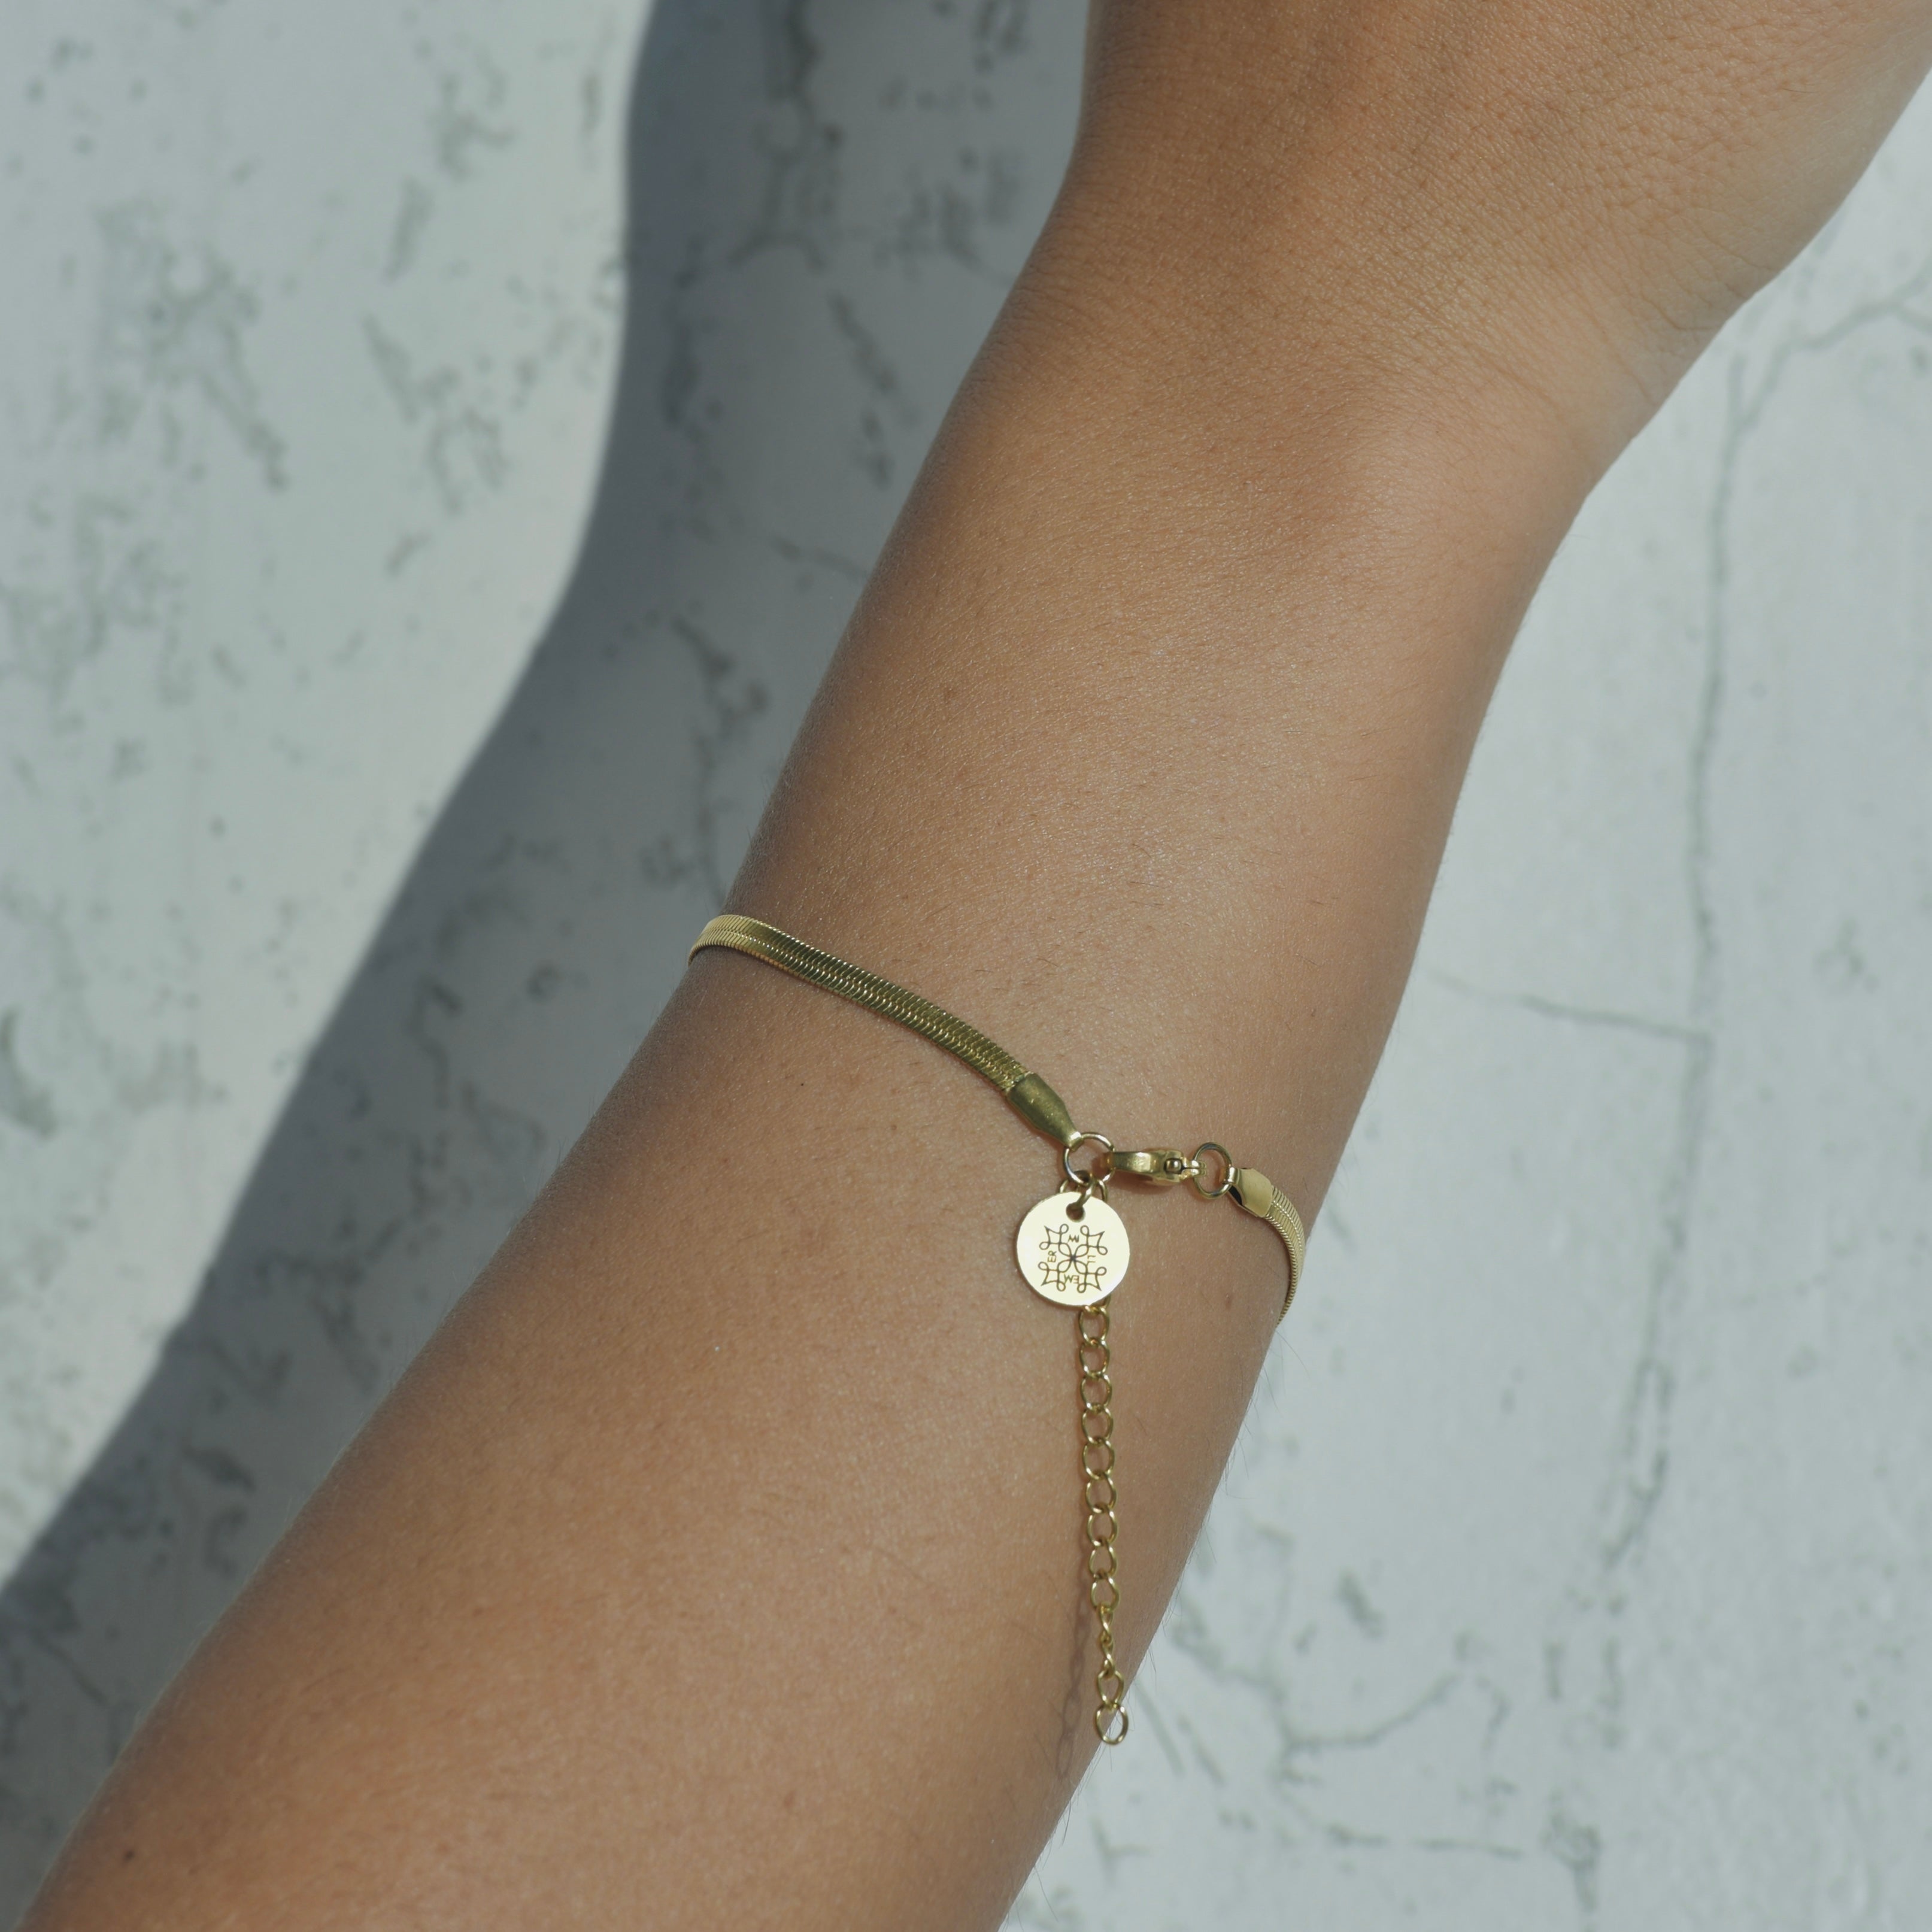 Herringbone texture Gold bracelet.